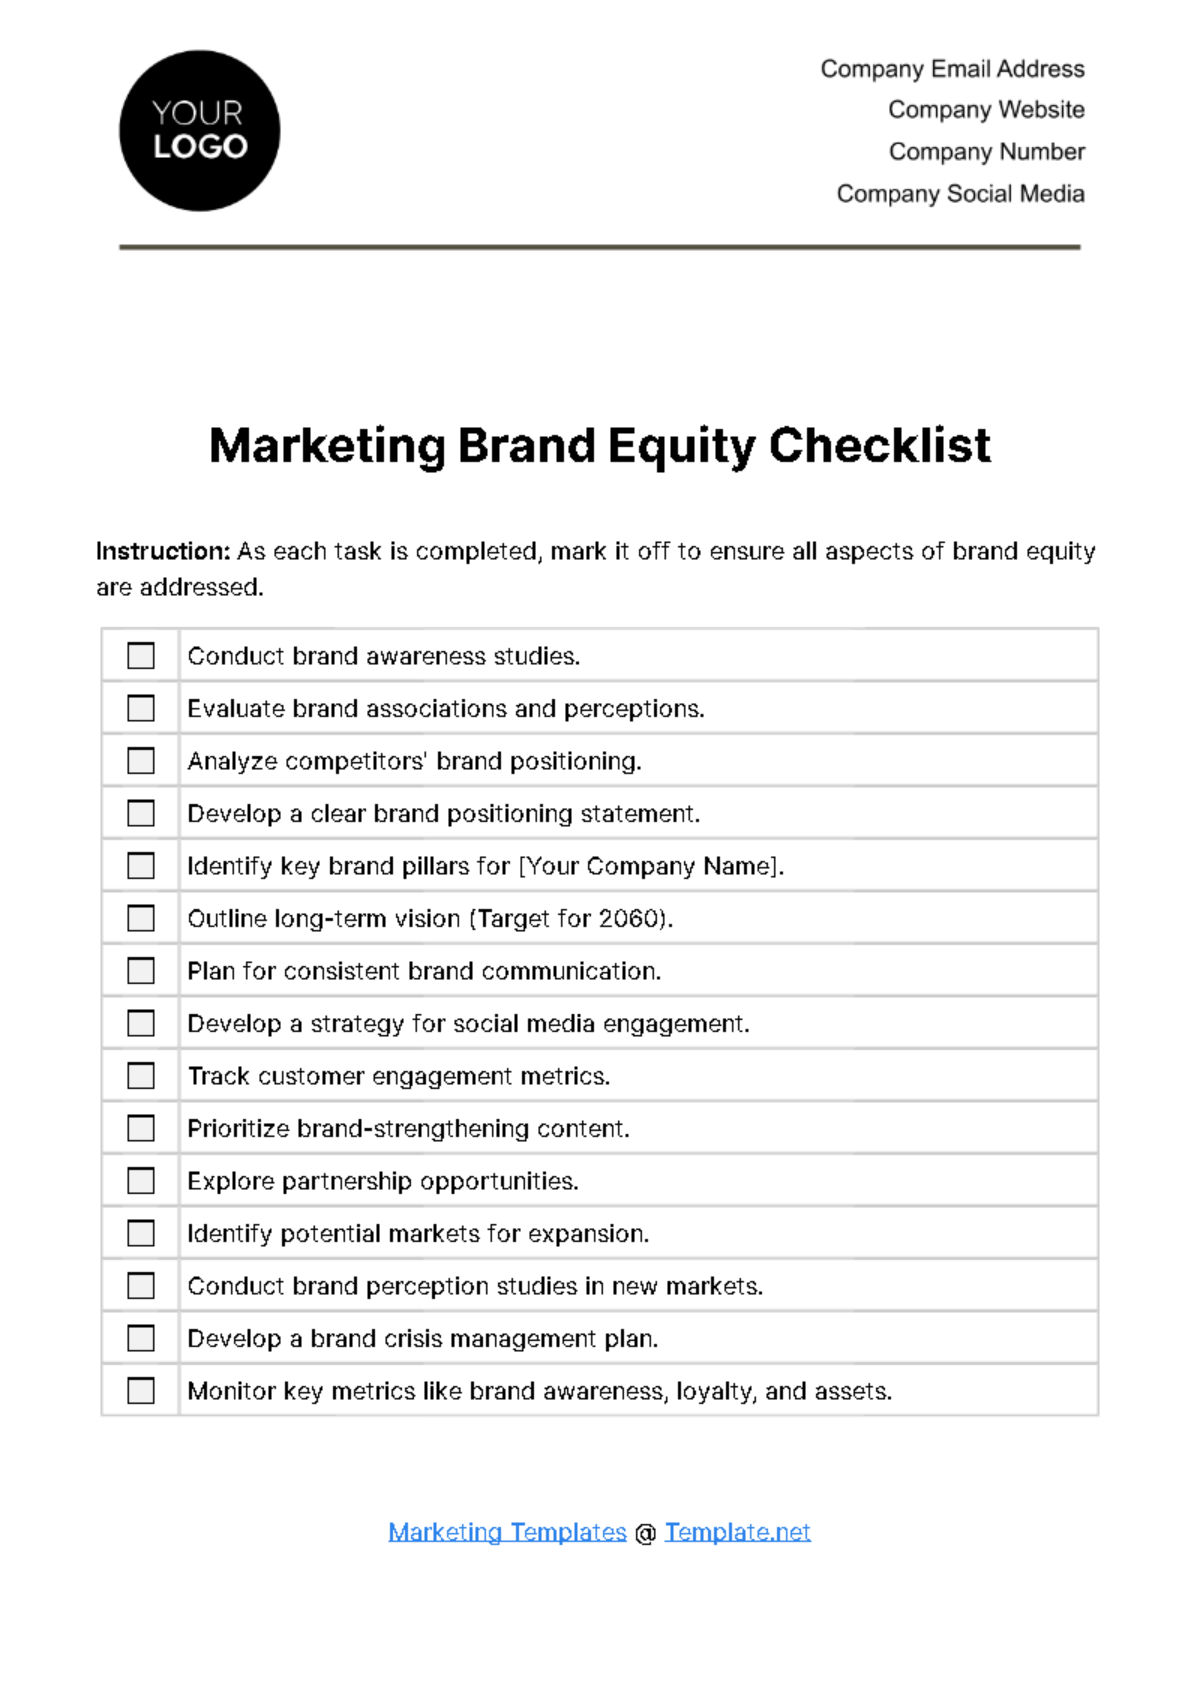 Free Marketing Brand Equity Checklist Template